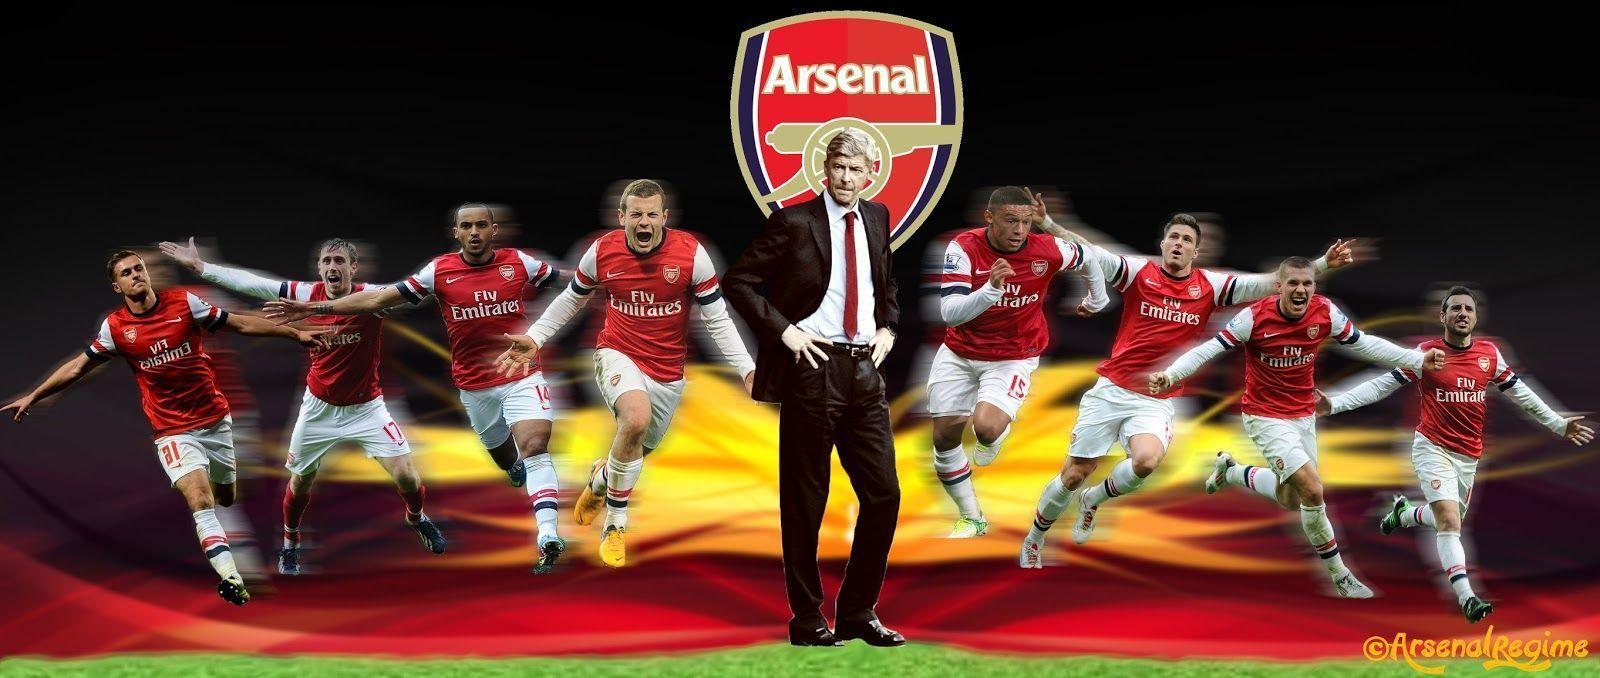 Arsenal Team Wallpaper